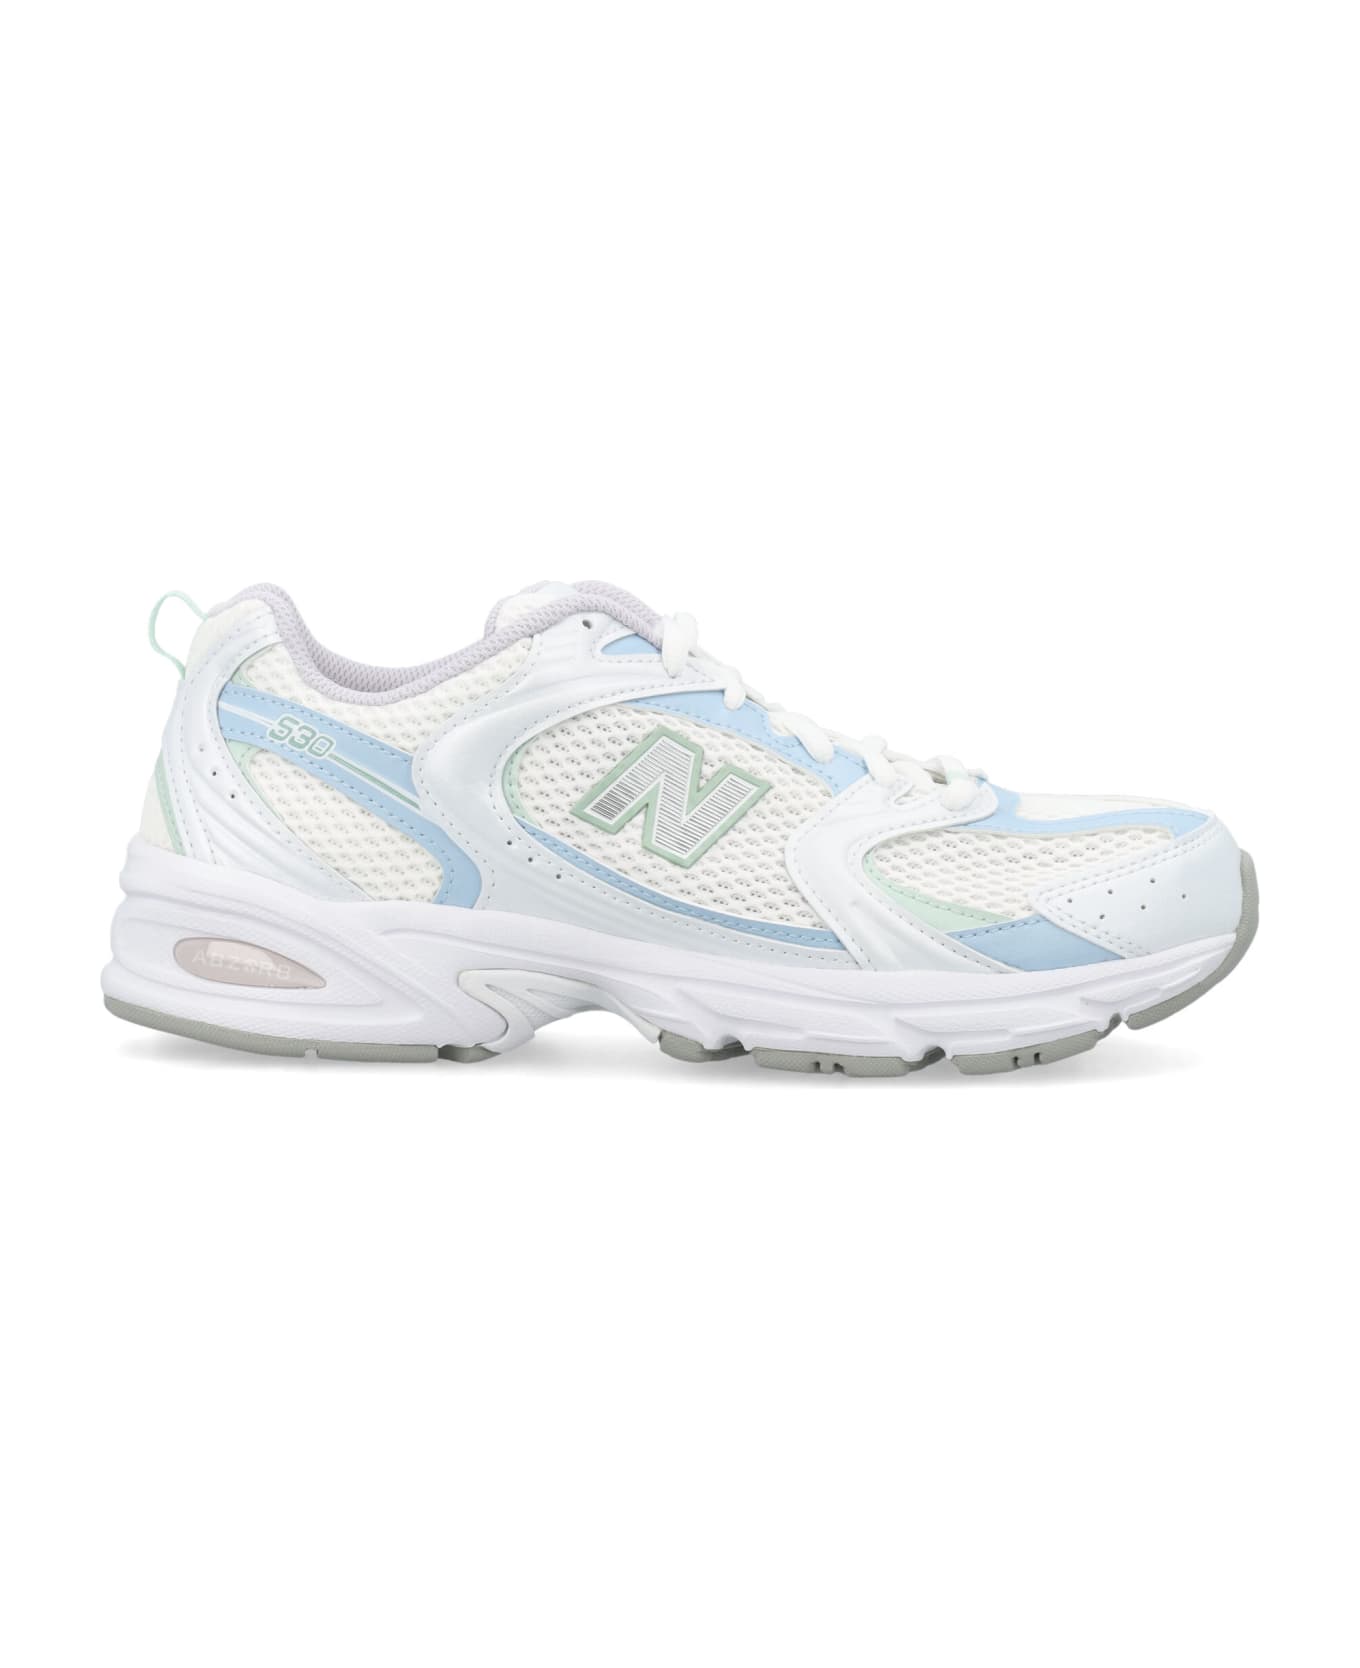 New Balance 530 Sneakers - WHITE/LIGHT BLUE